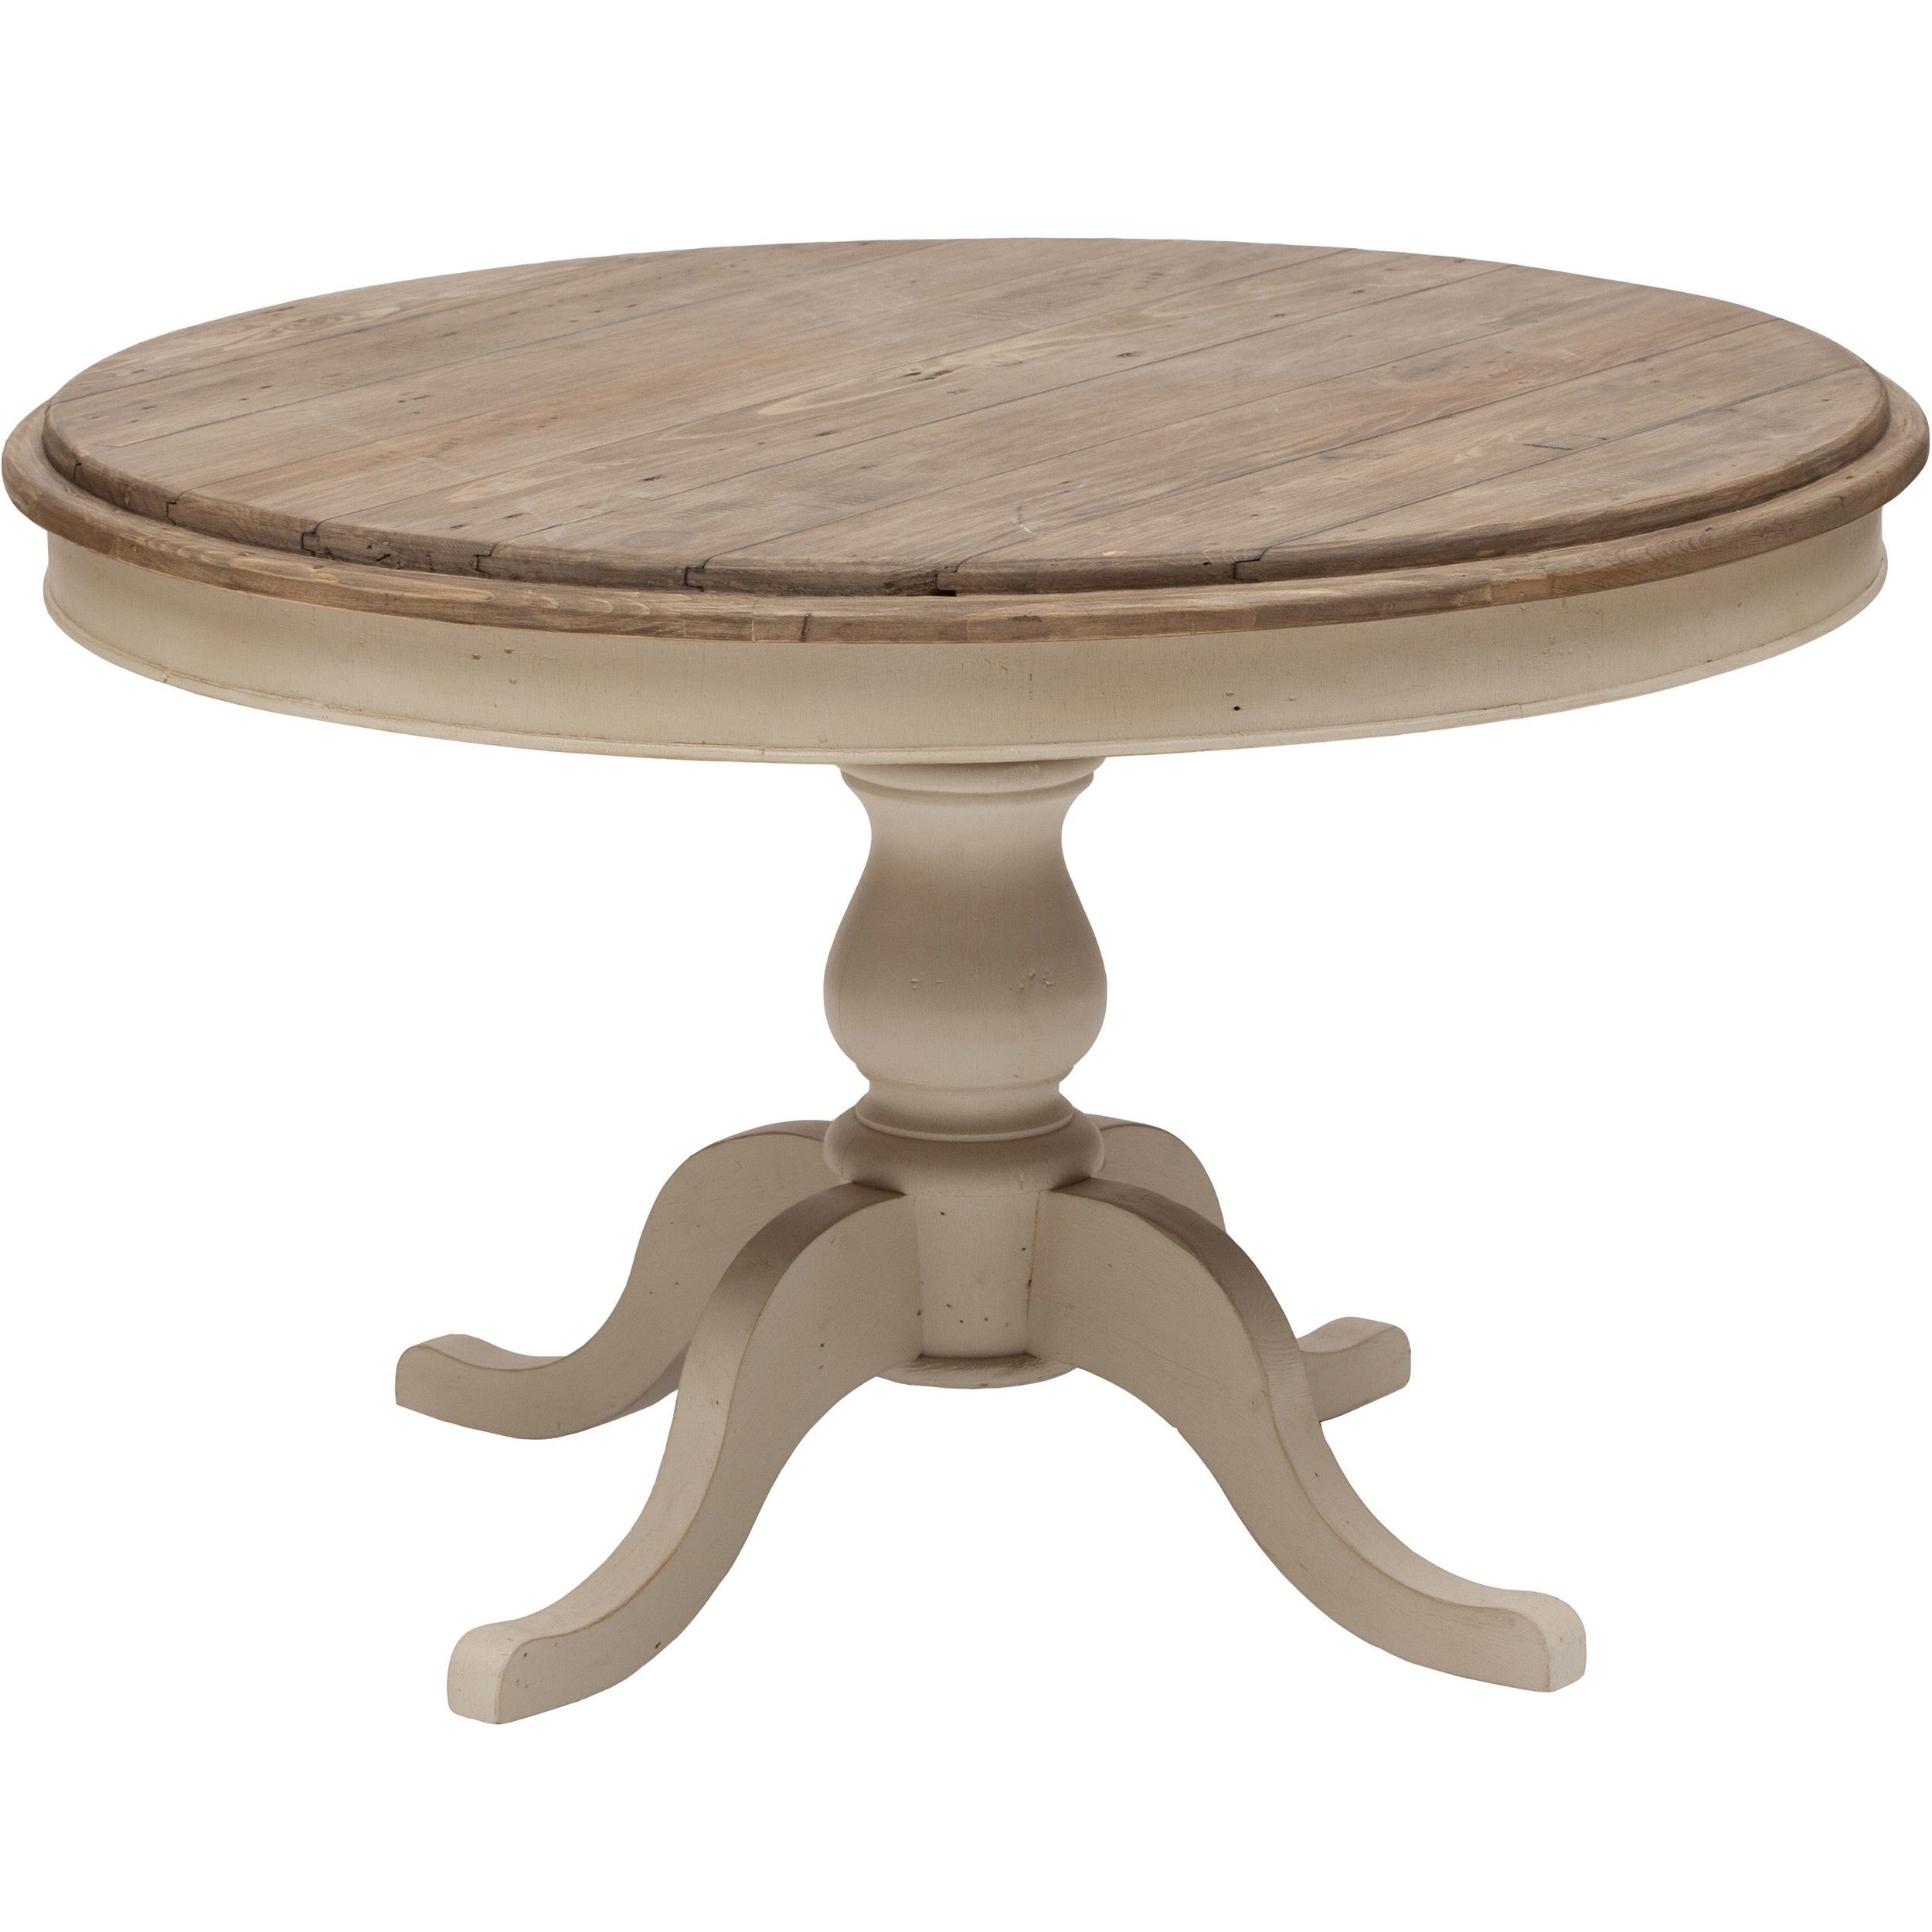 White wood pedestal table